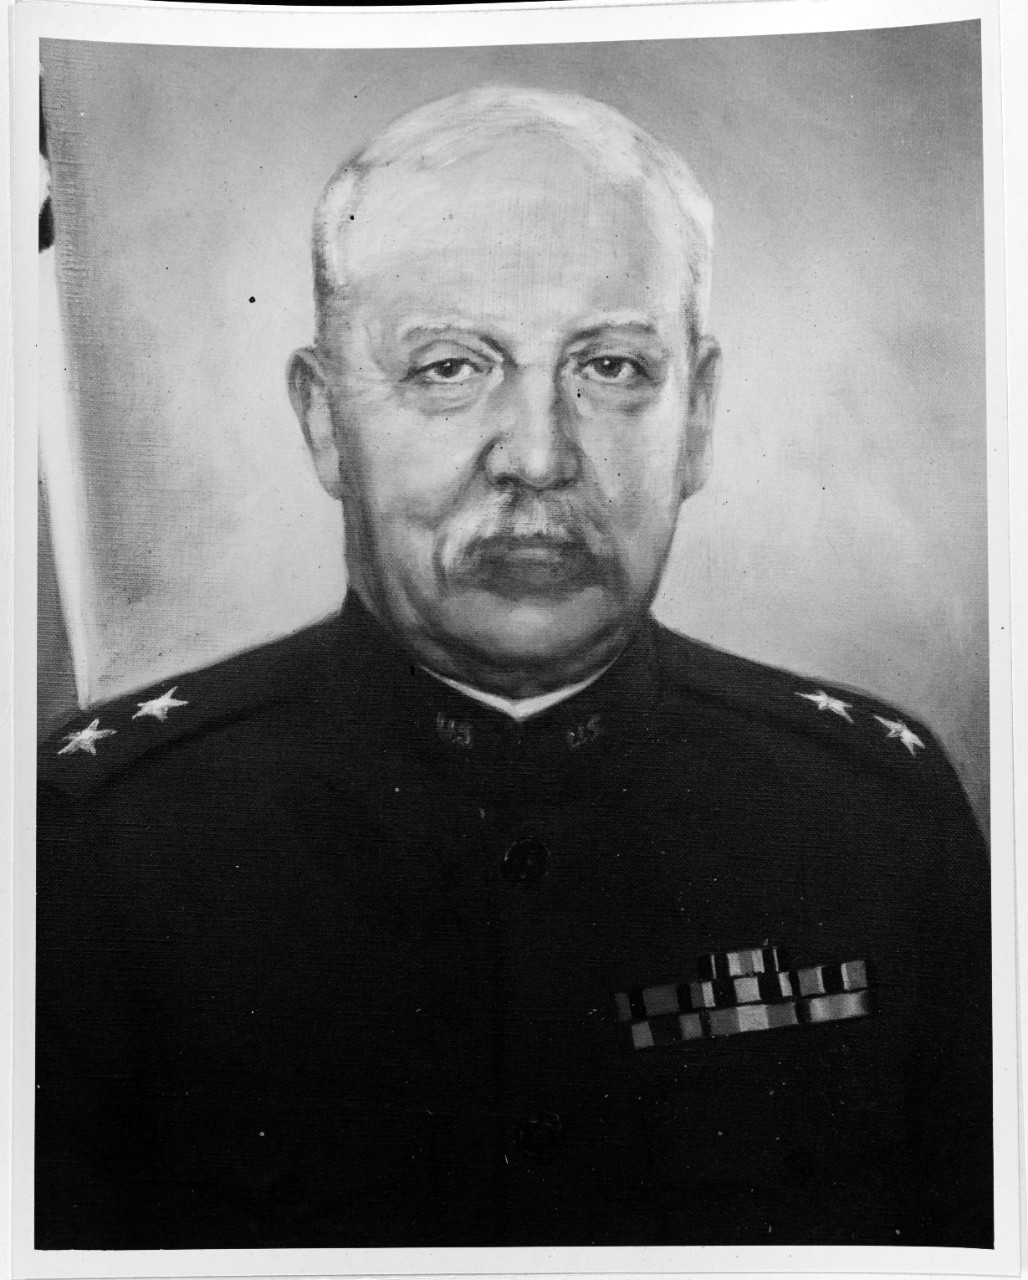 William A. Mann, Major General, USA